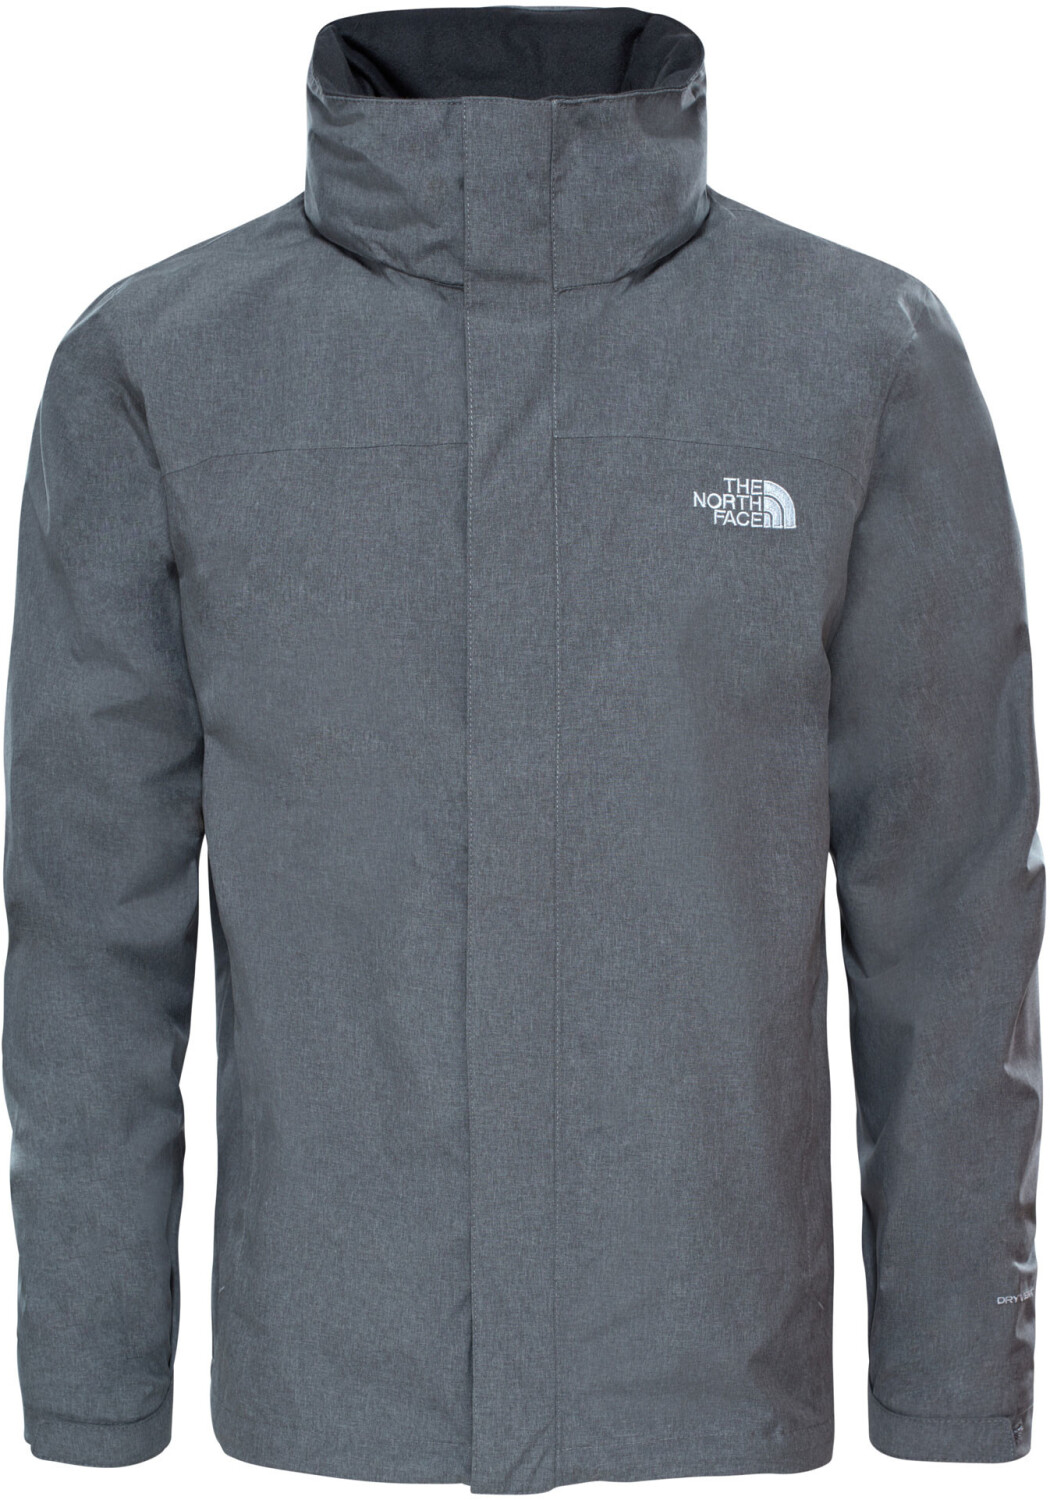 Buy The North Face Men's Sangro Jacket tnf medium grey heather from £86 ...